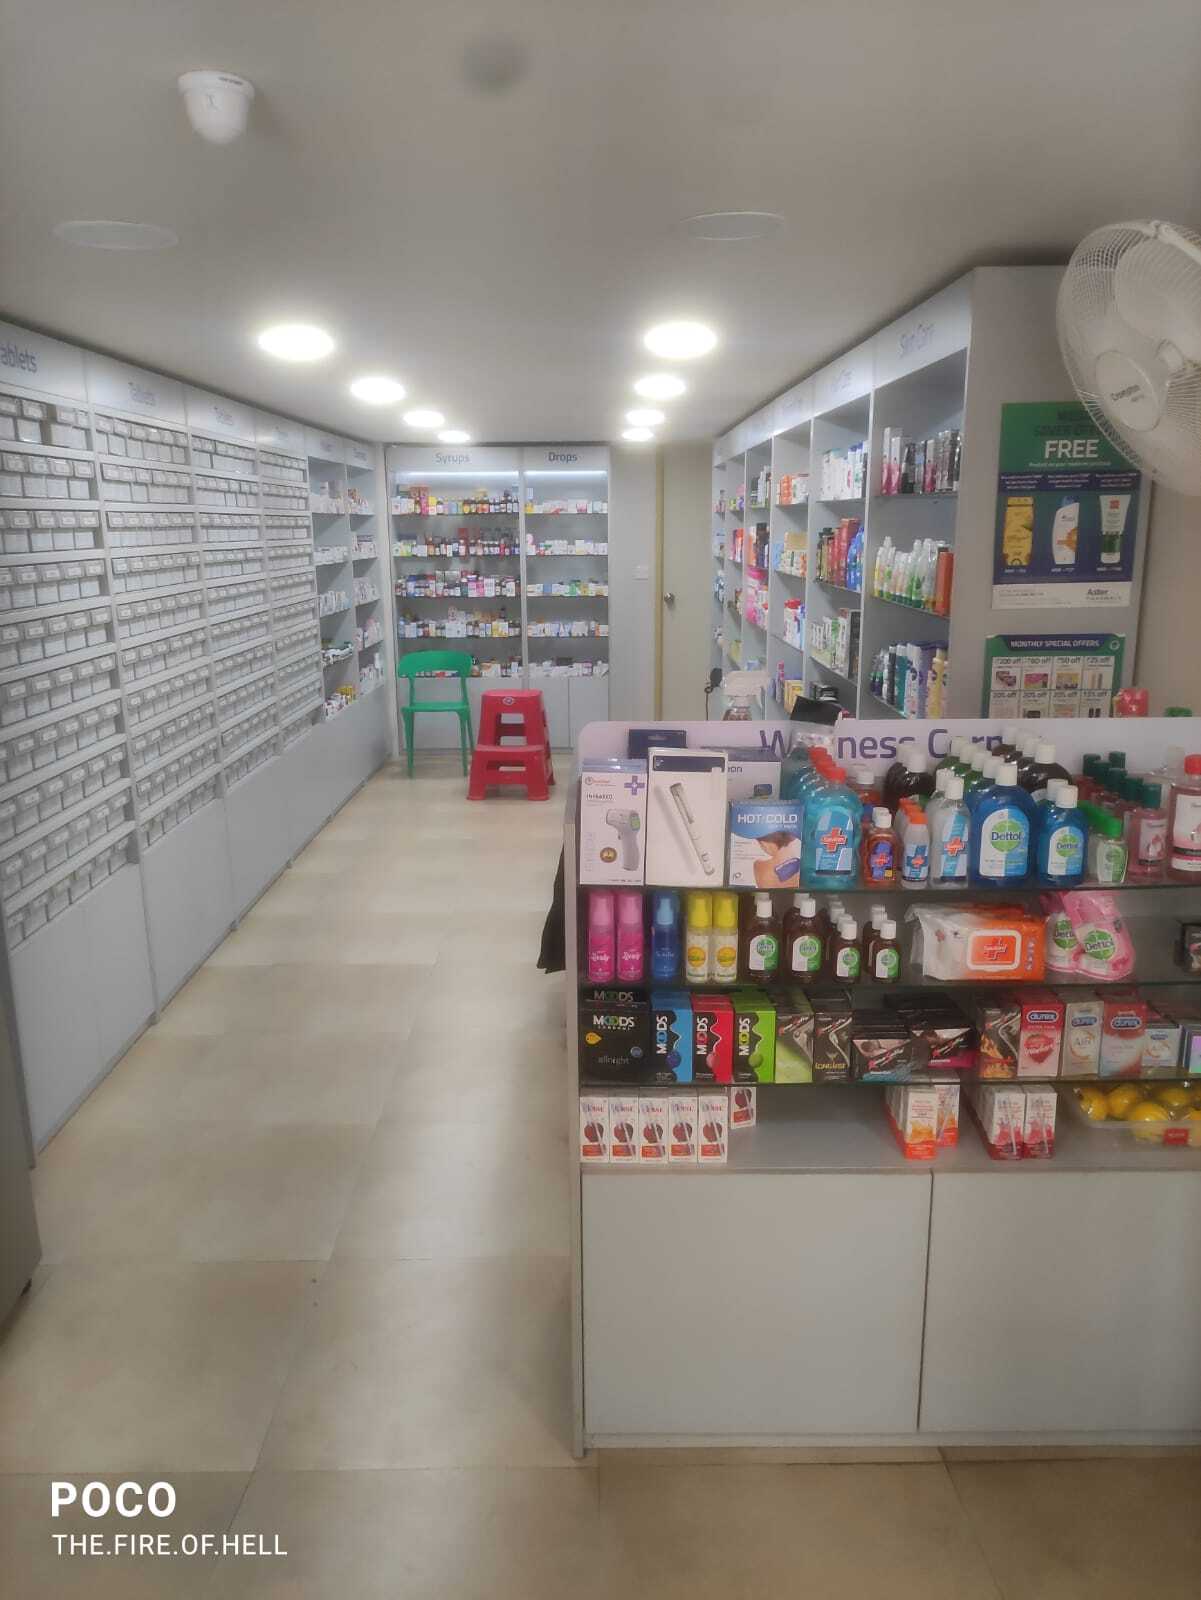 Aster Pharmacy in Kammagondanahalli, Bangalore